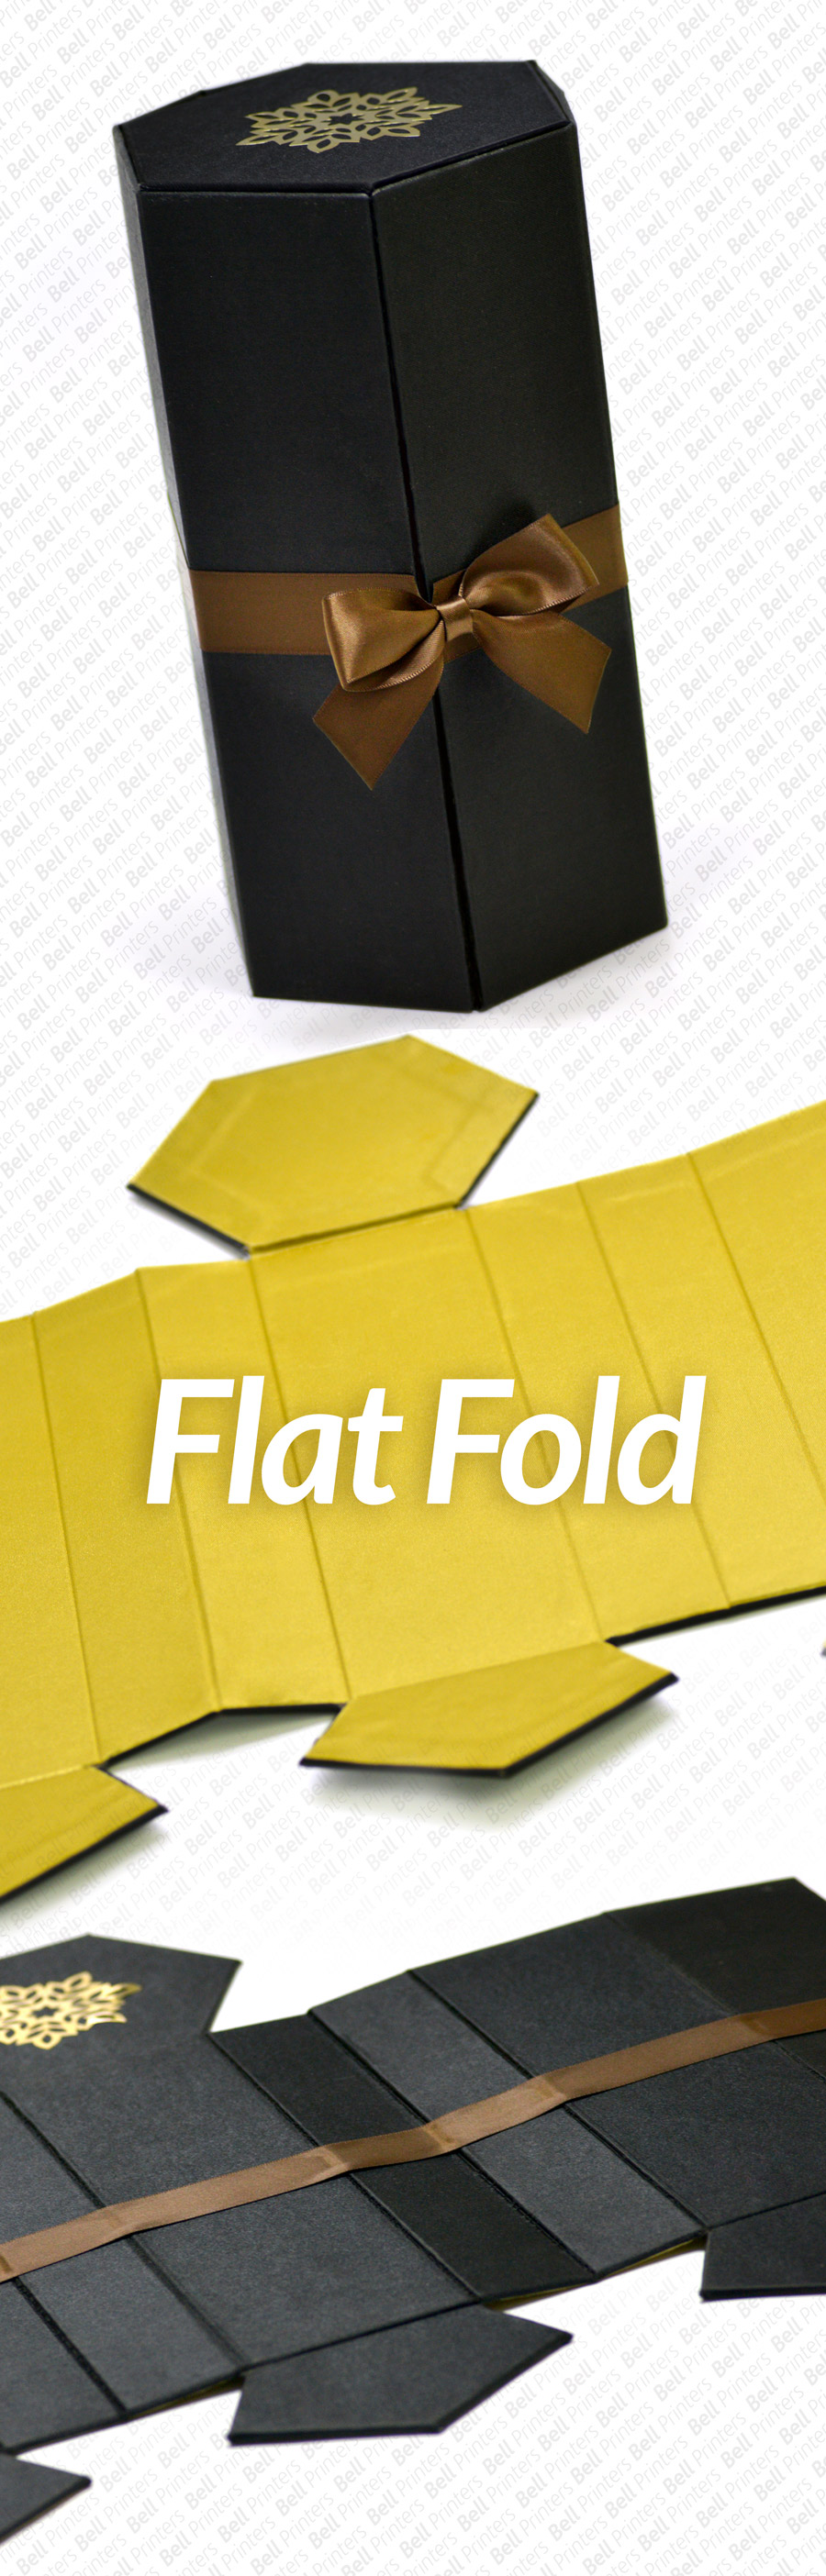 Flat fold hexagonal Rigid Box | flat fold gift boxes 